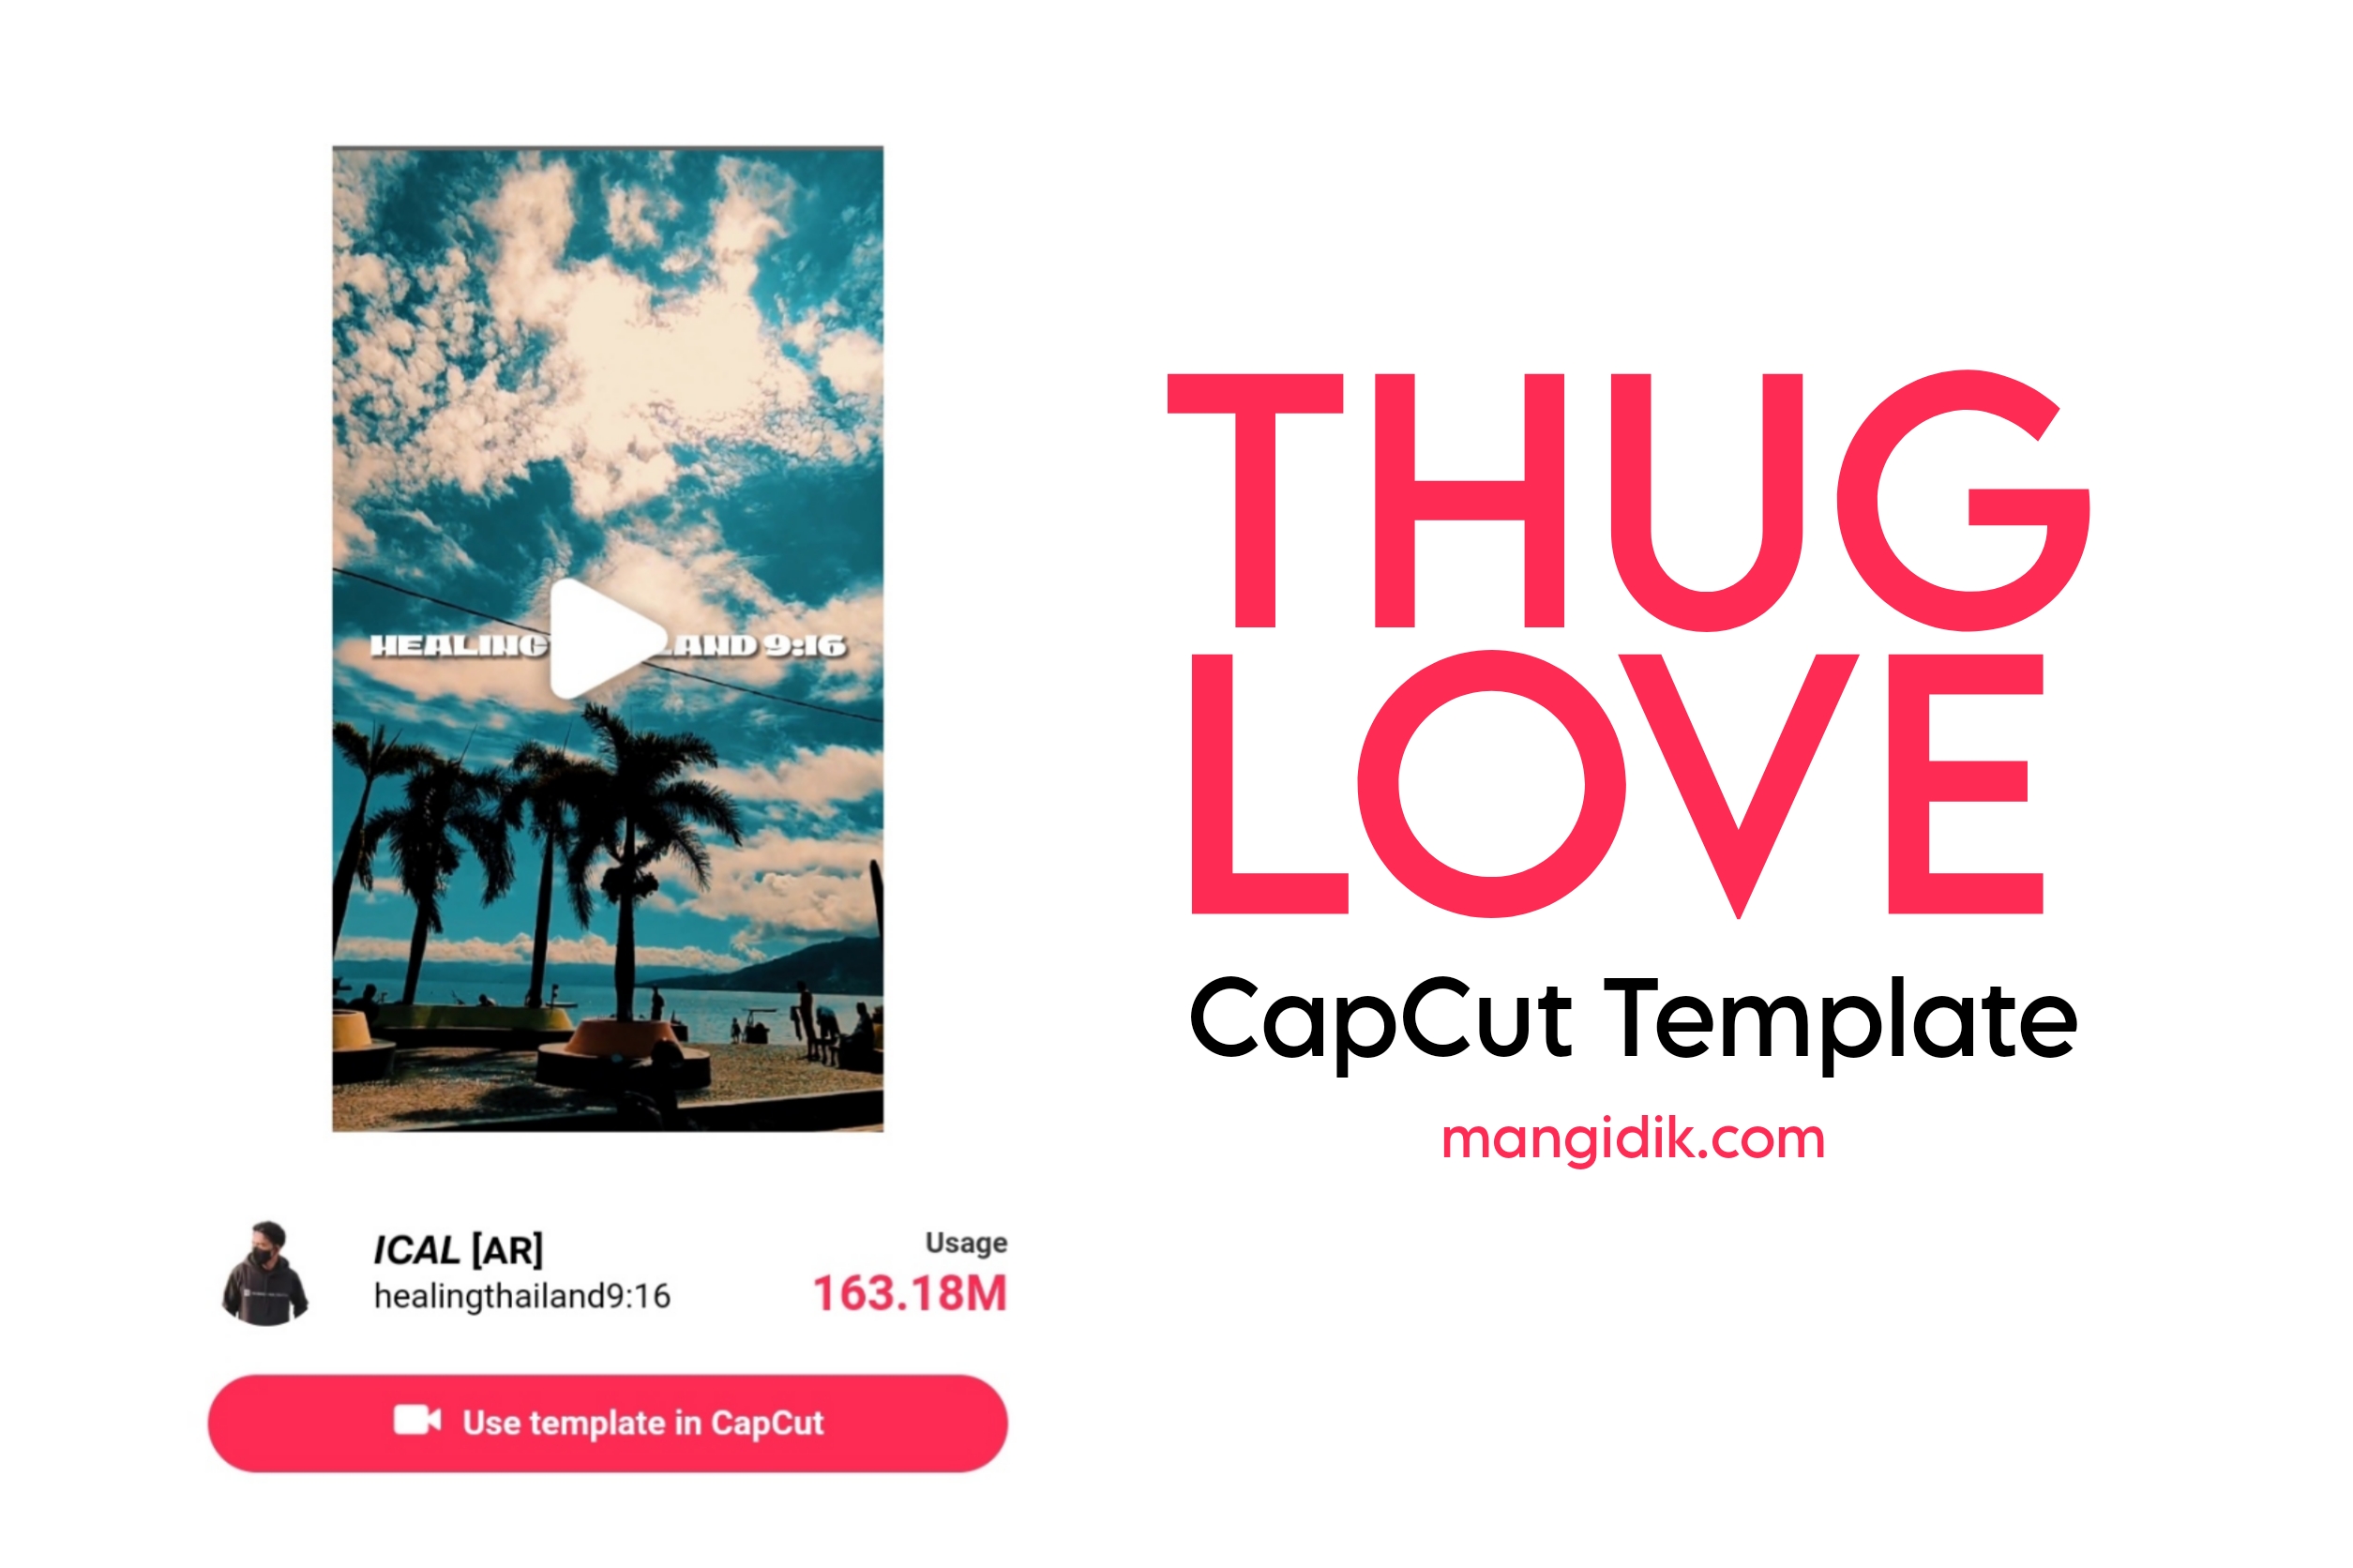 Thug Love CapCut Template Link by Ical Mang Idik